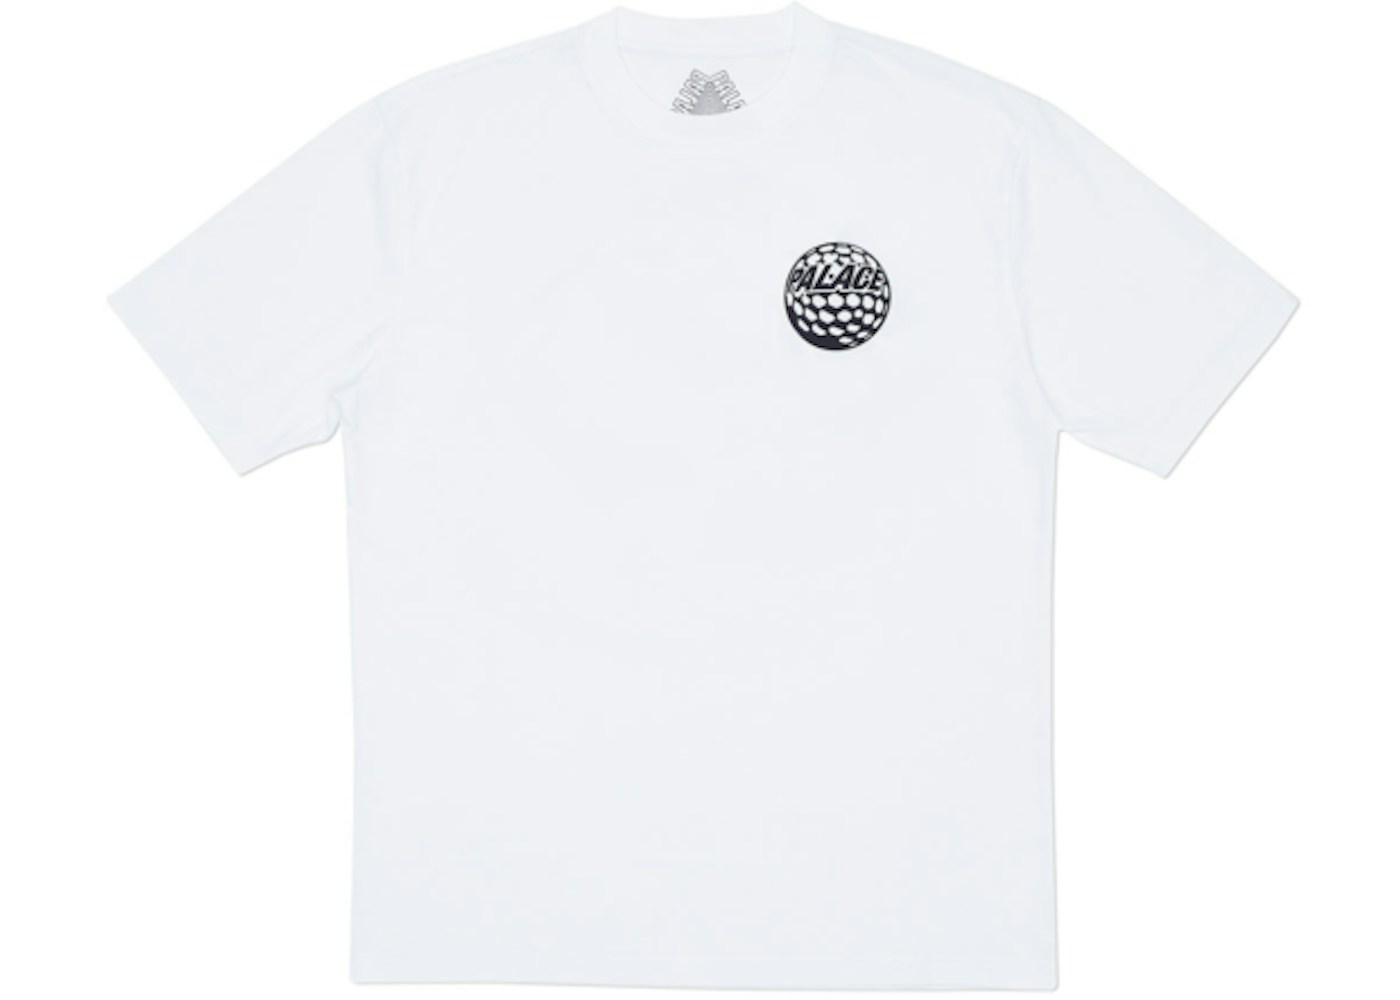 Palace P45 T-Shirt White/Black - Autumn 2017